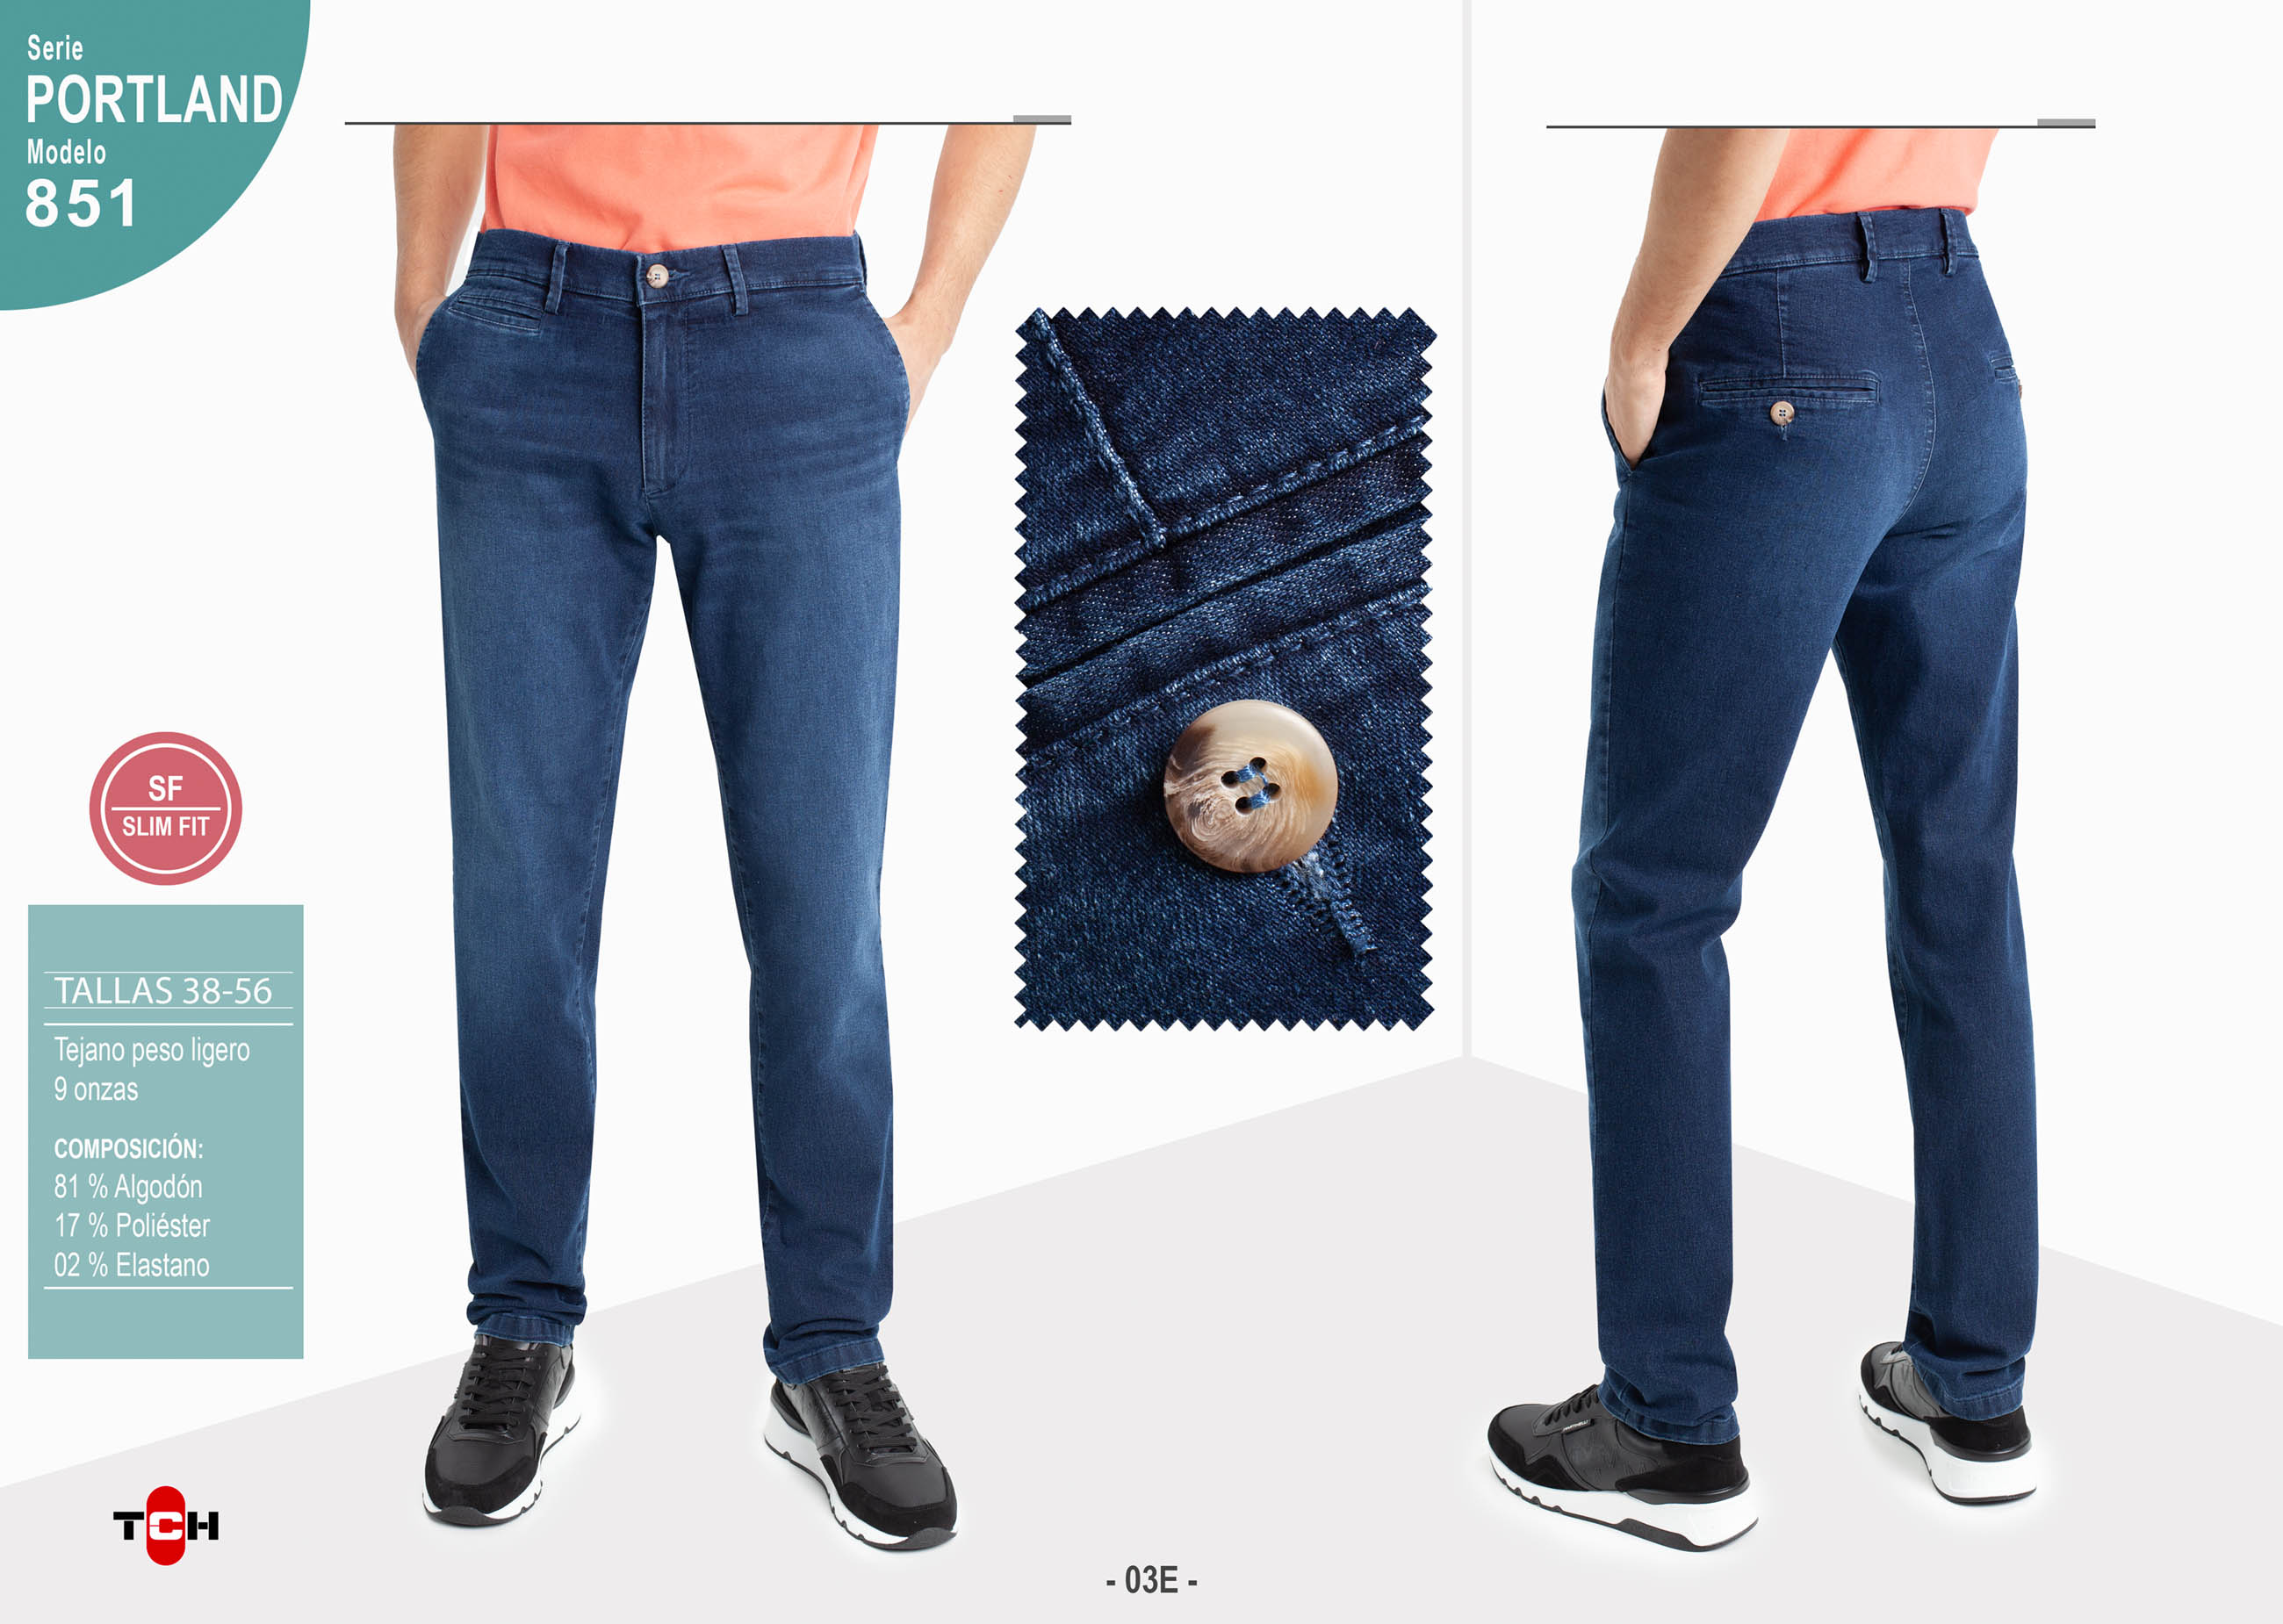 Pantalón de hombre TCH Casual Sport tipo chino tejido vaquero denim lavado azul oscuro de algodón, poliester con lycra SLIM fabricado en España.